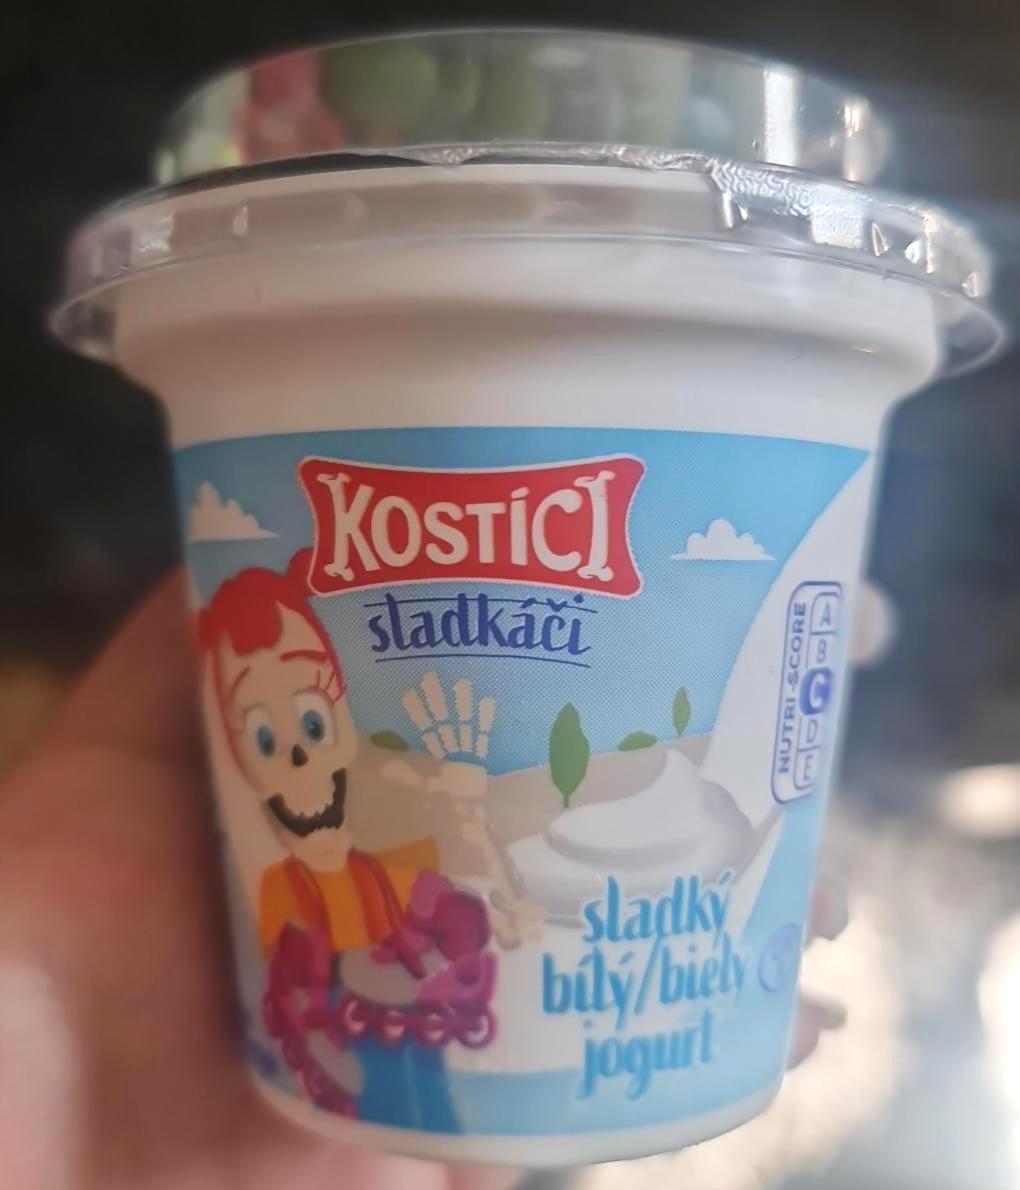 Képek - Kostíci Sladkáči Sladký biely jogurt Danone